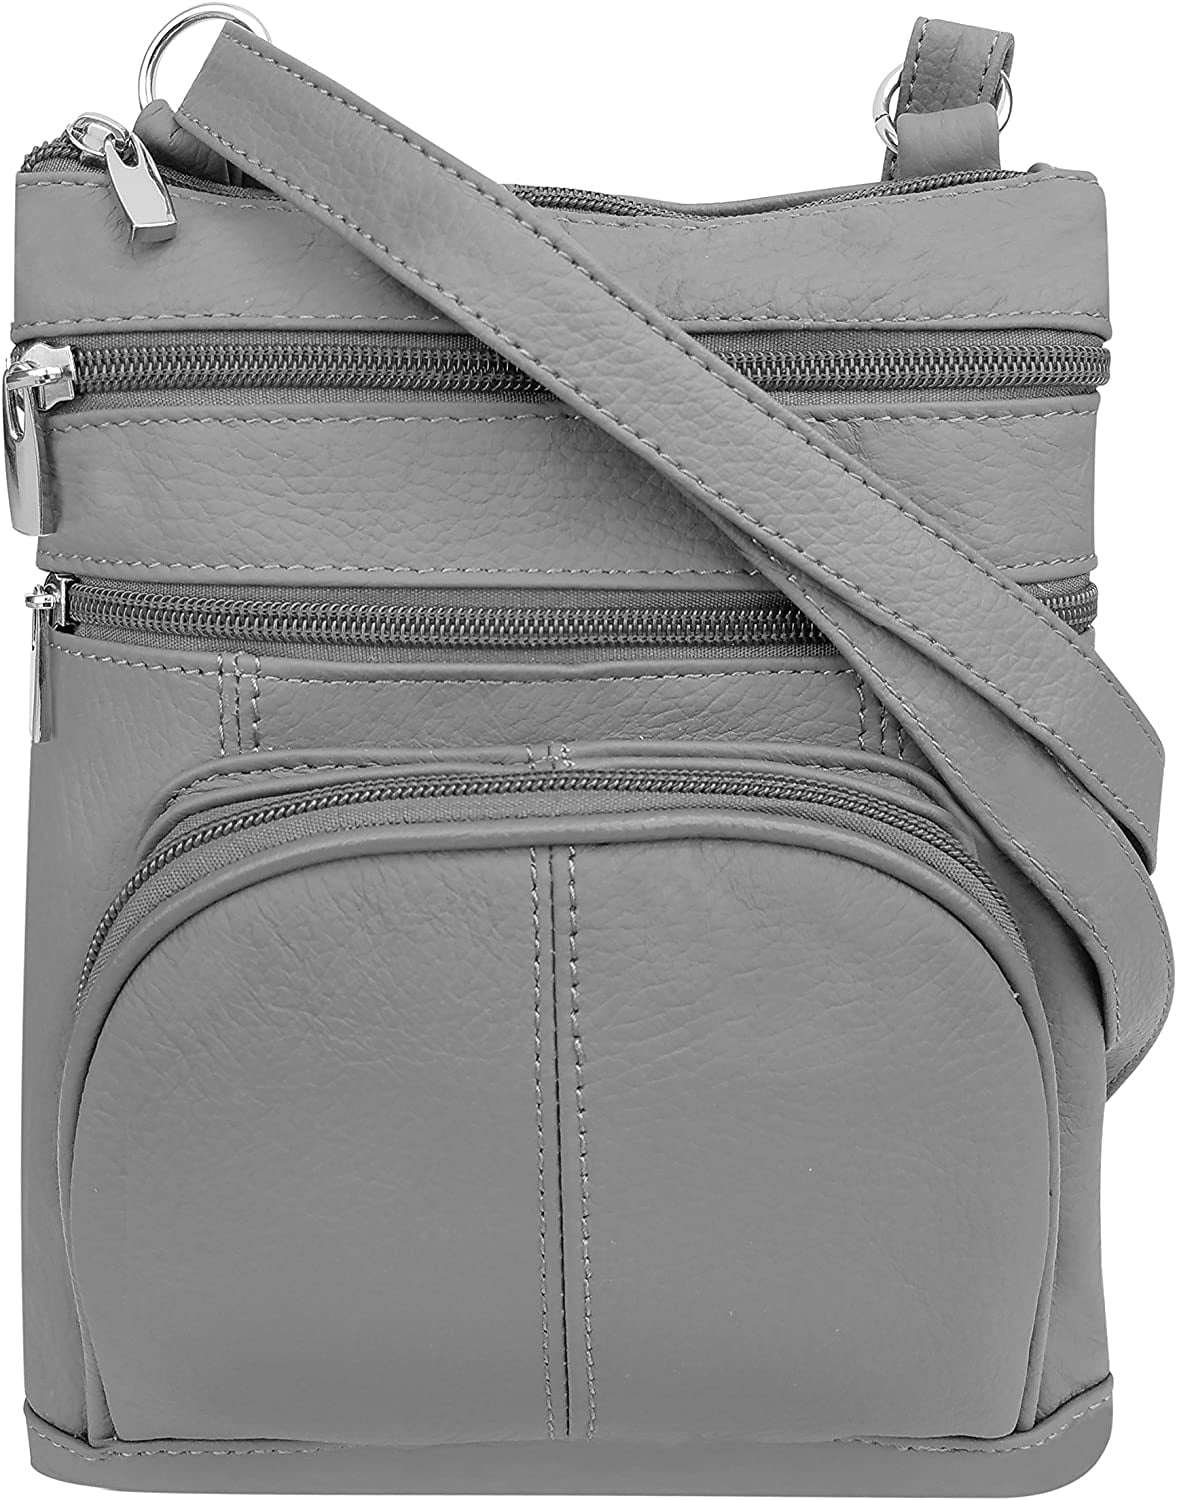 Cute Grey Handbag - Faux Leather Bag - Crossbody Bag - Waist Bag - Lulus